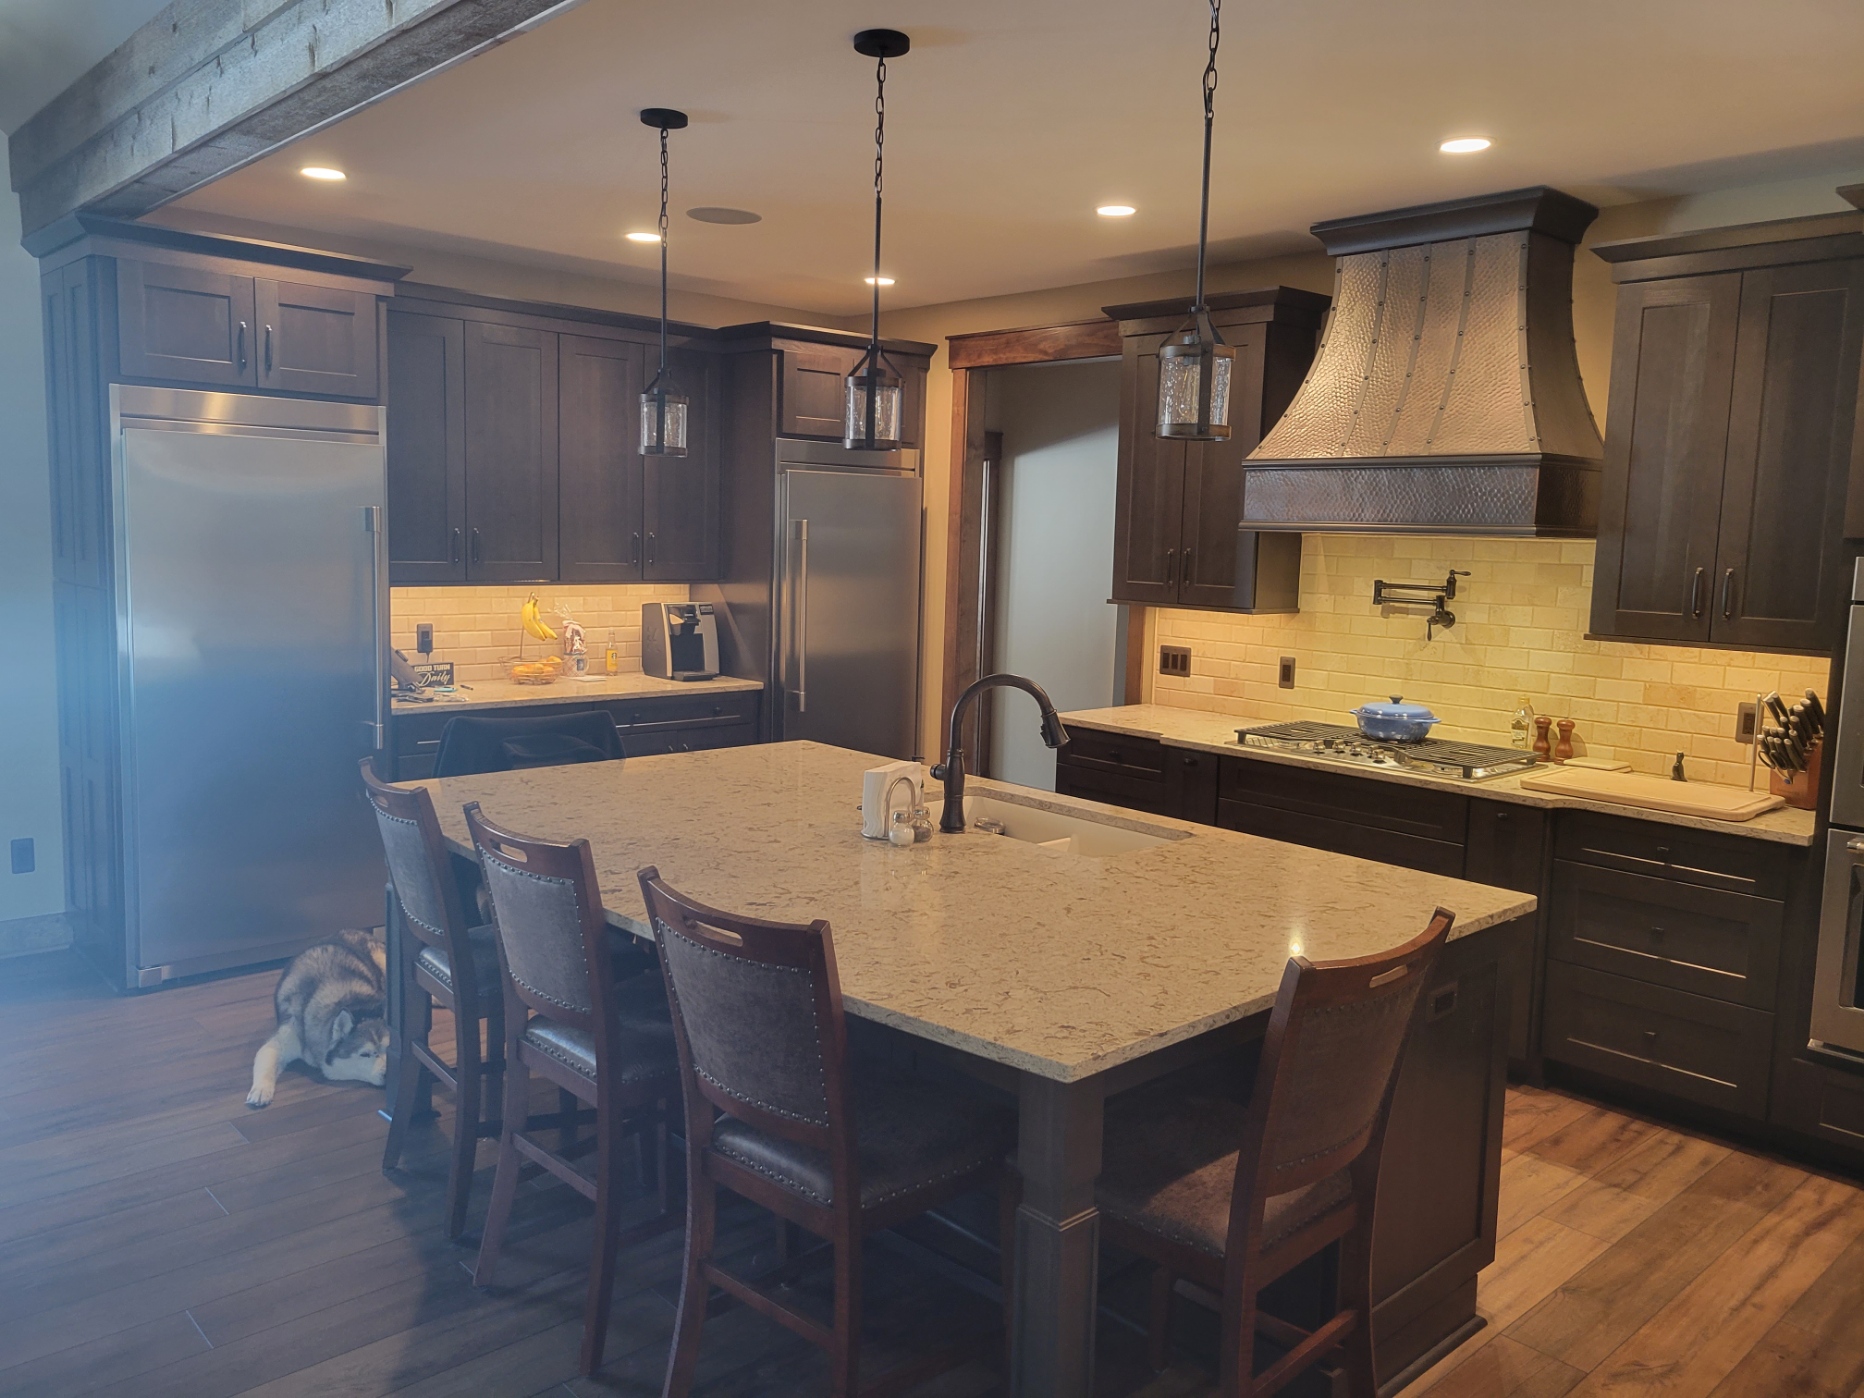 Modern kitchen design idea, sleek range hood options,kitchen techniques, brown kitchen cabinets,marble kitchen countertops, and brick backsplash